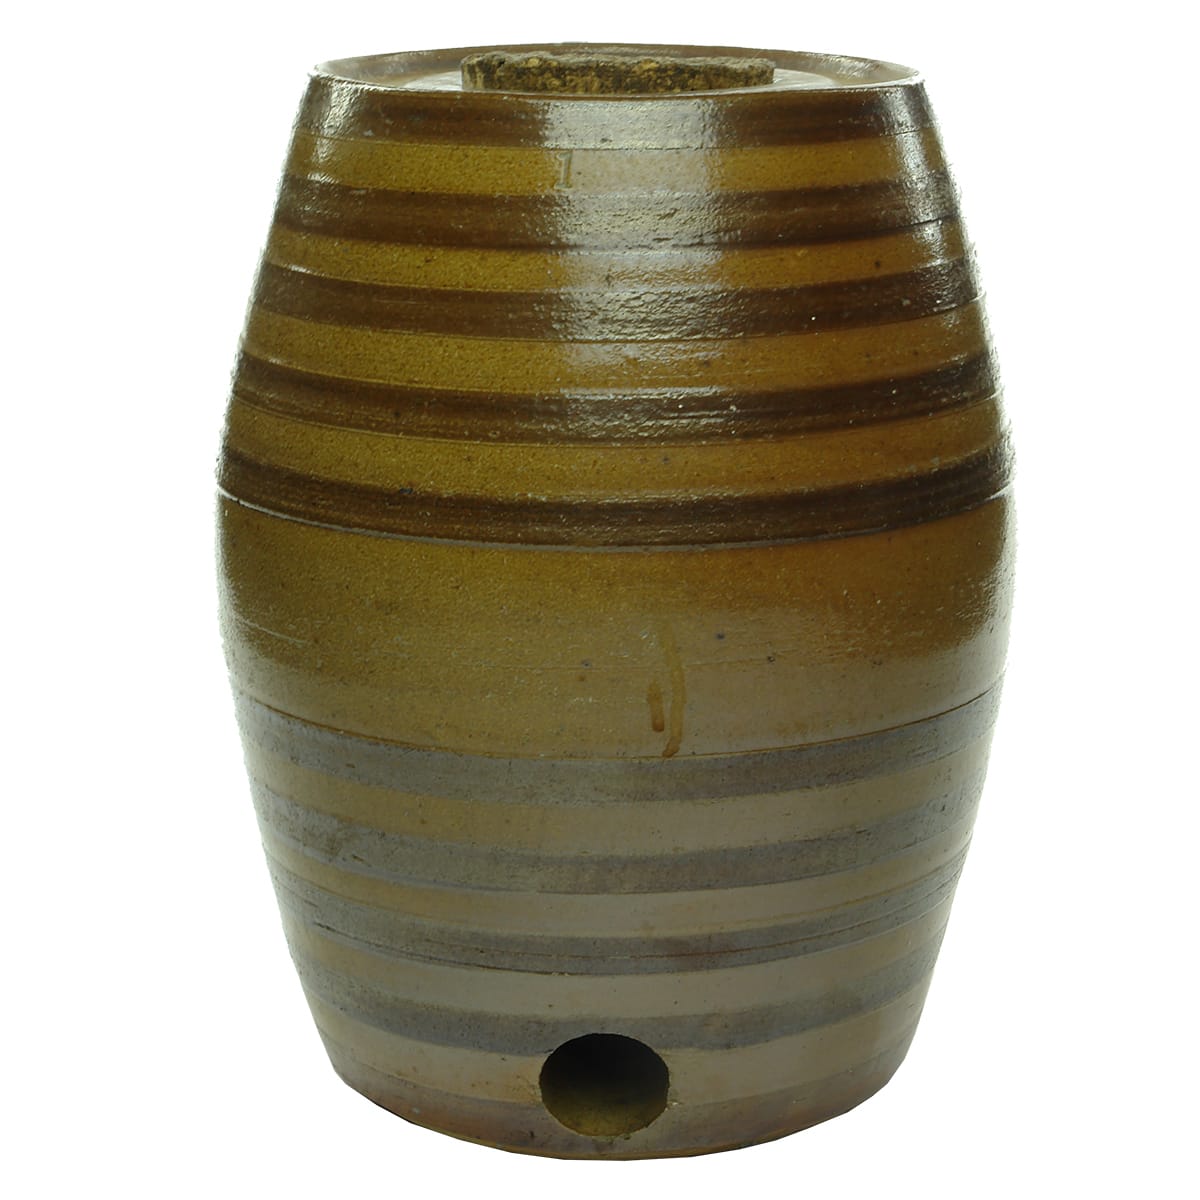 Stoneware Barrel. Banded Pattern. One Gallon.